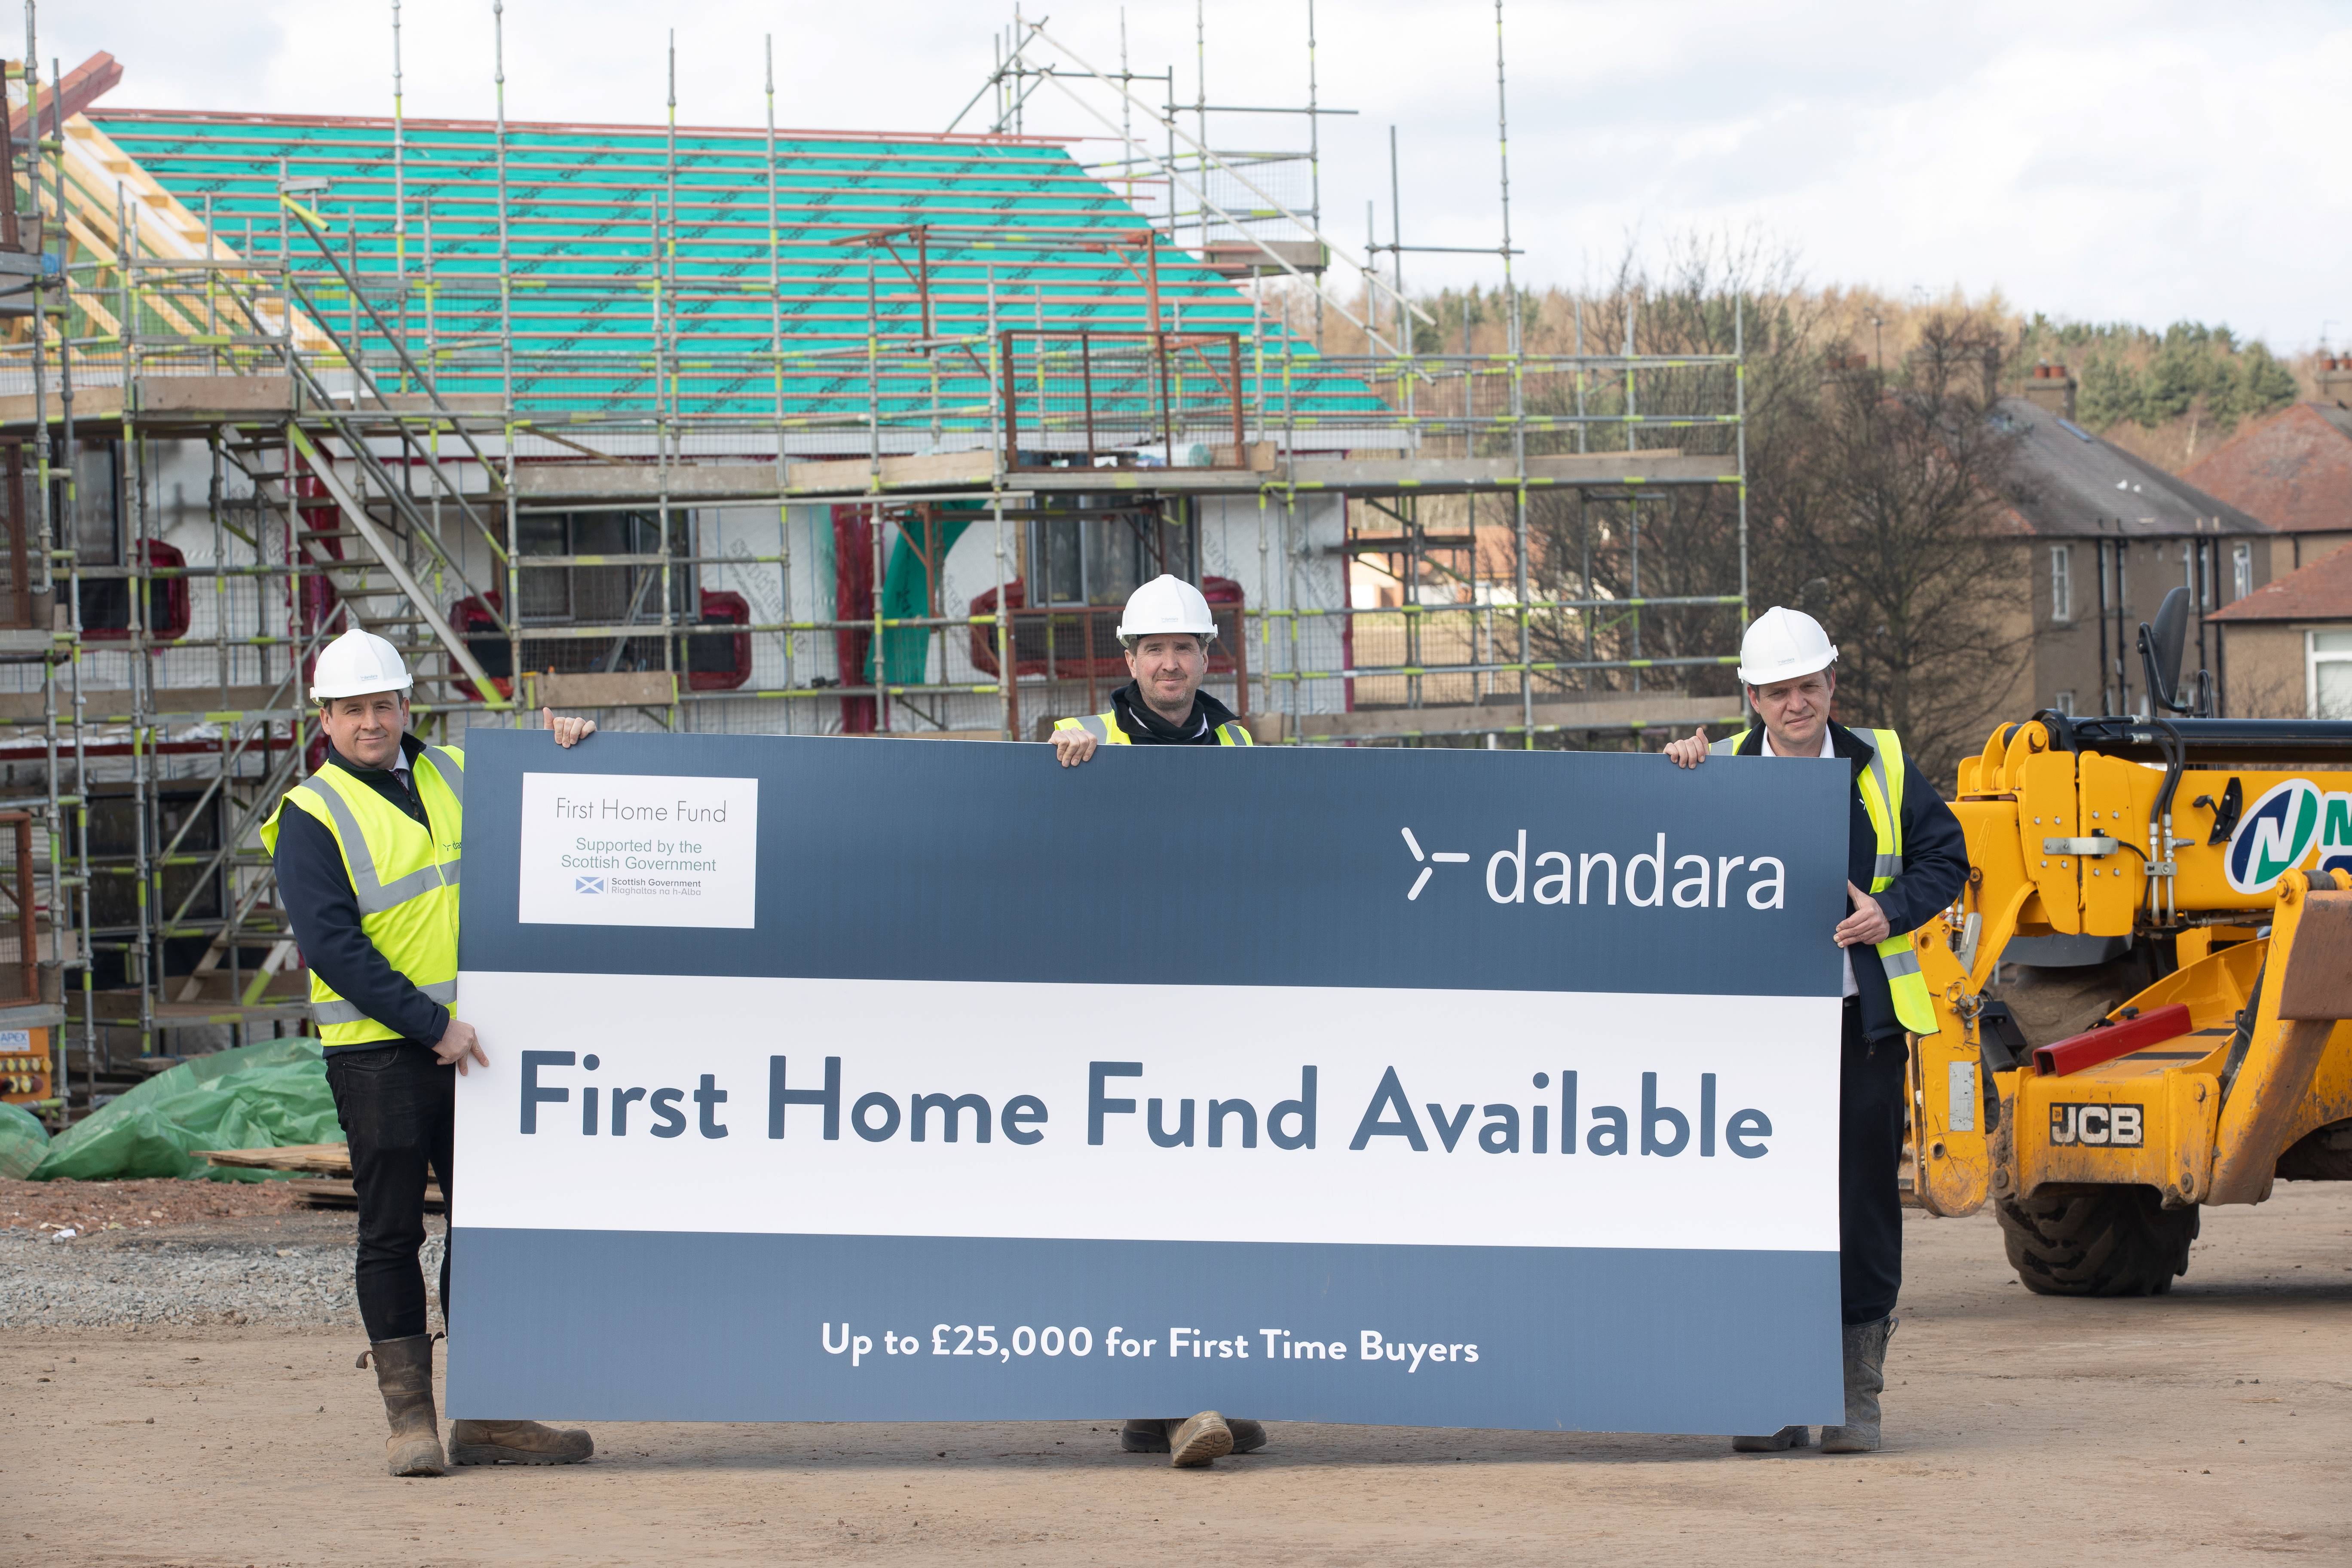 First Home Fund launches in Scotland 6LR Dandara